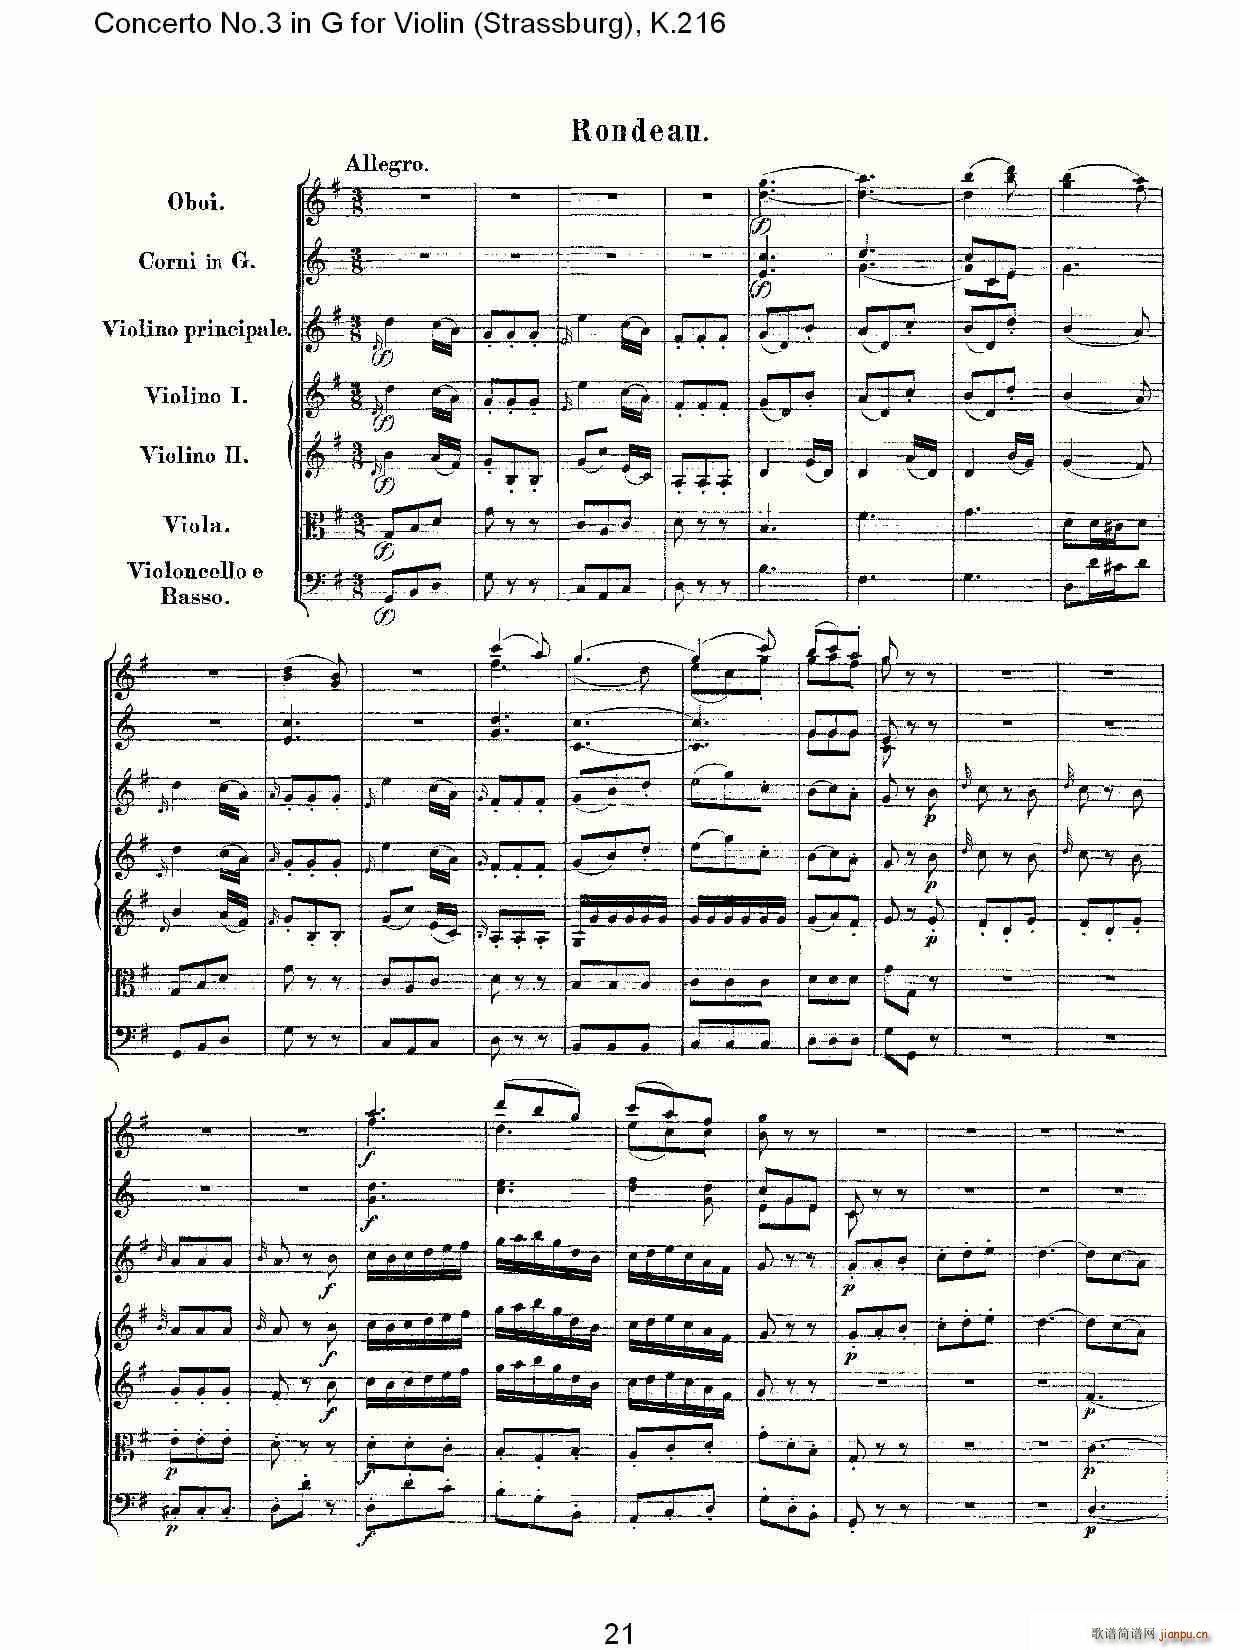 Concerto No.3 in G for Violin K.216(С)21